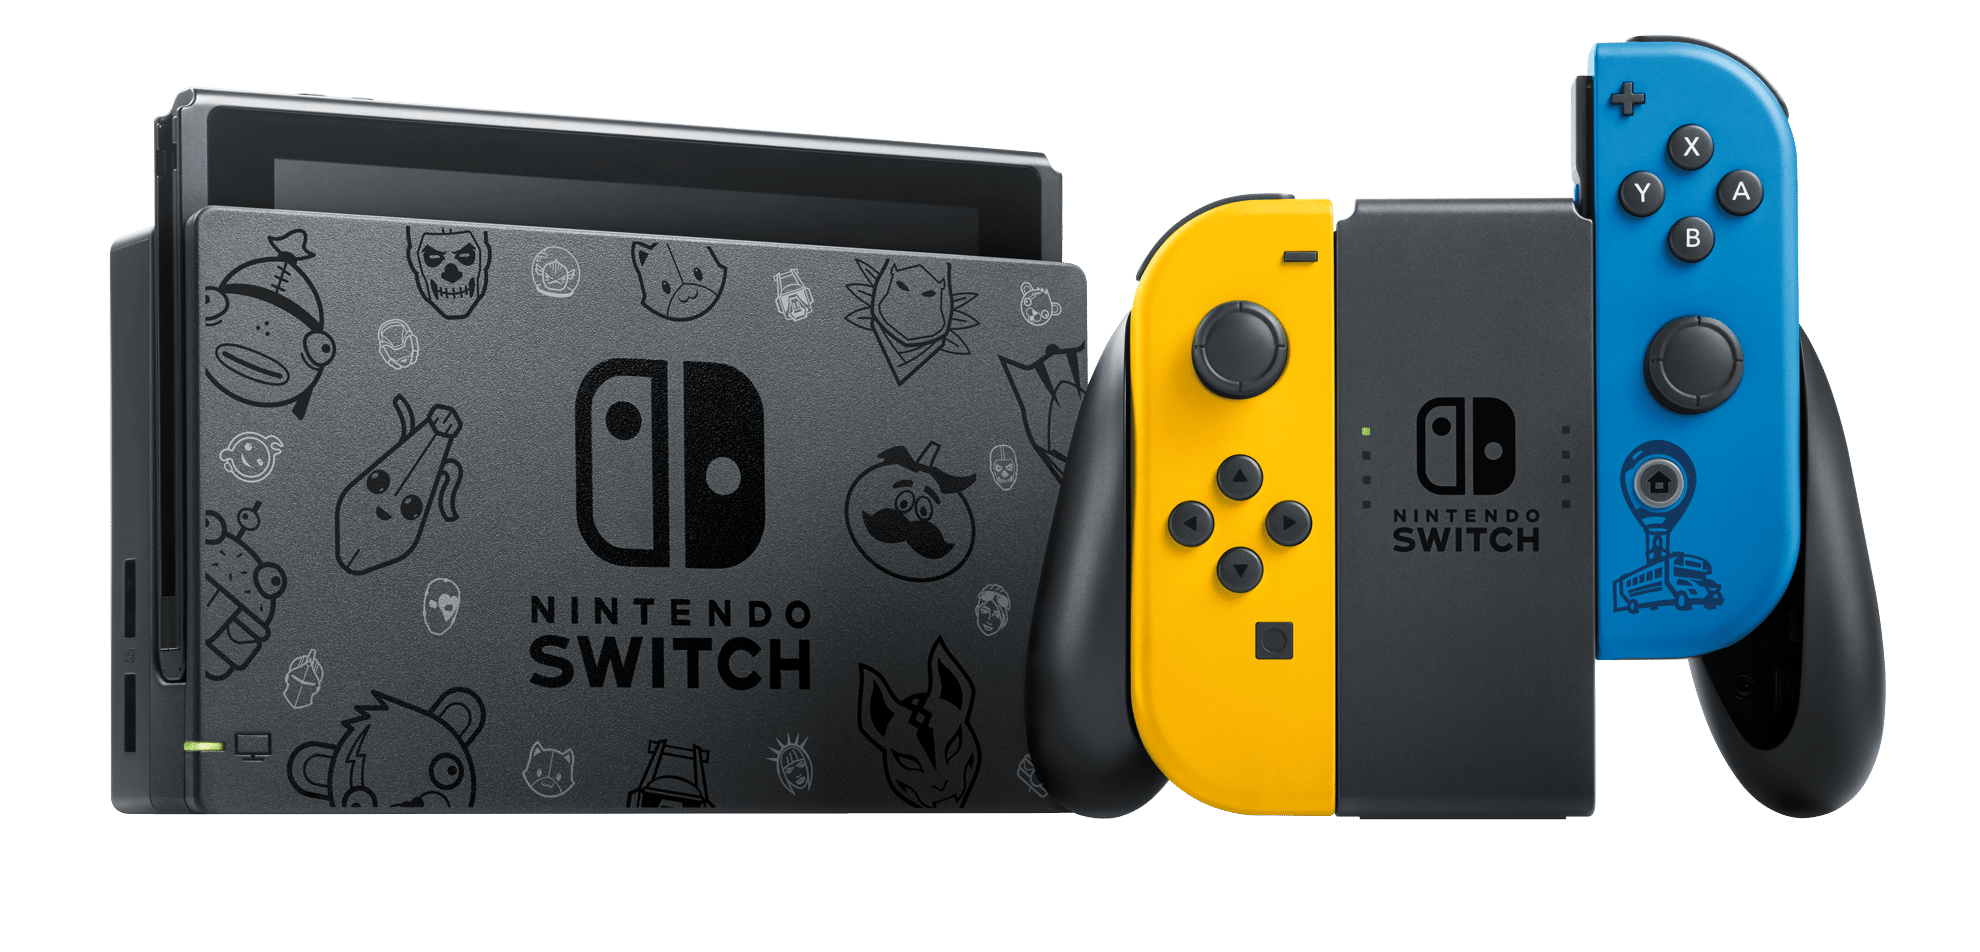 Nintendo switch edition купить. Игровая консоль Nintendo Switch. Игровая приставка Nintendo Switch «особое издание Fortnite». Nintendo Switch Rev 2. Nintendo Switch 2018.